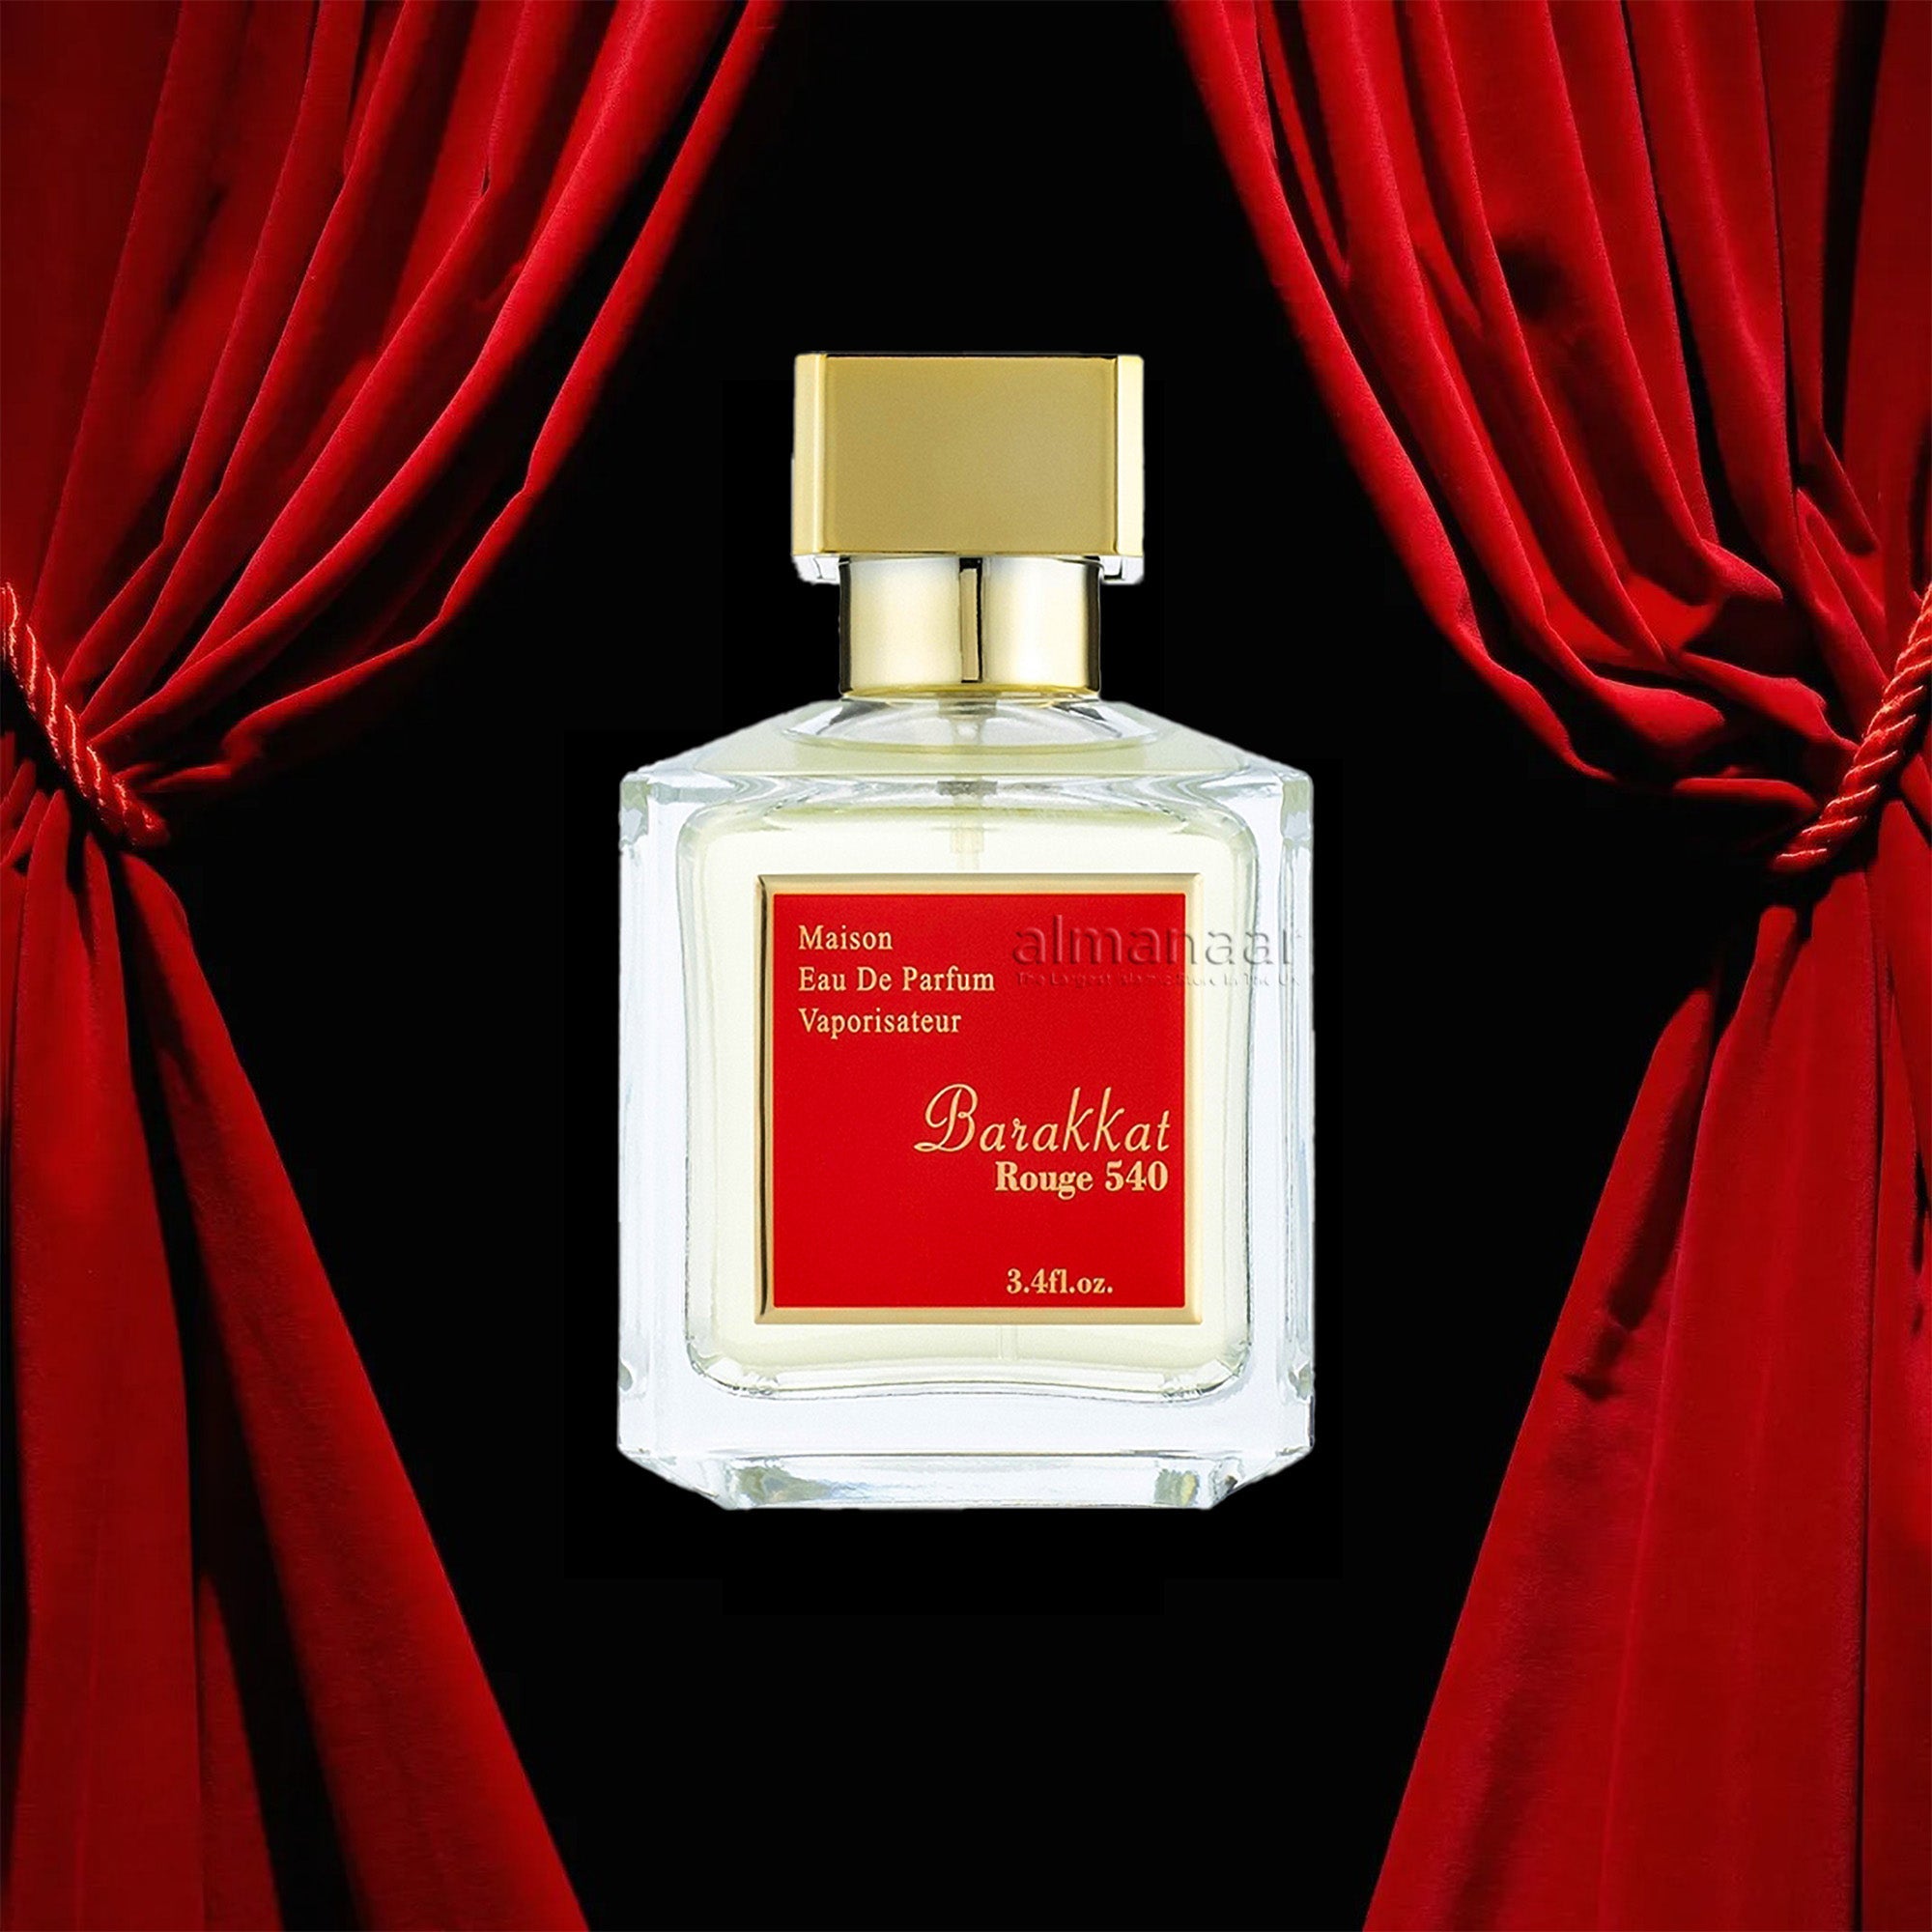 Руж 540 духи отзывы. Mason Eau de Parfum Baccarat rouge 504 60 мл. Barracat rouge 540. Baroque rouge 540. Barakkat rouge 540 Original.